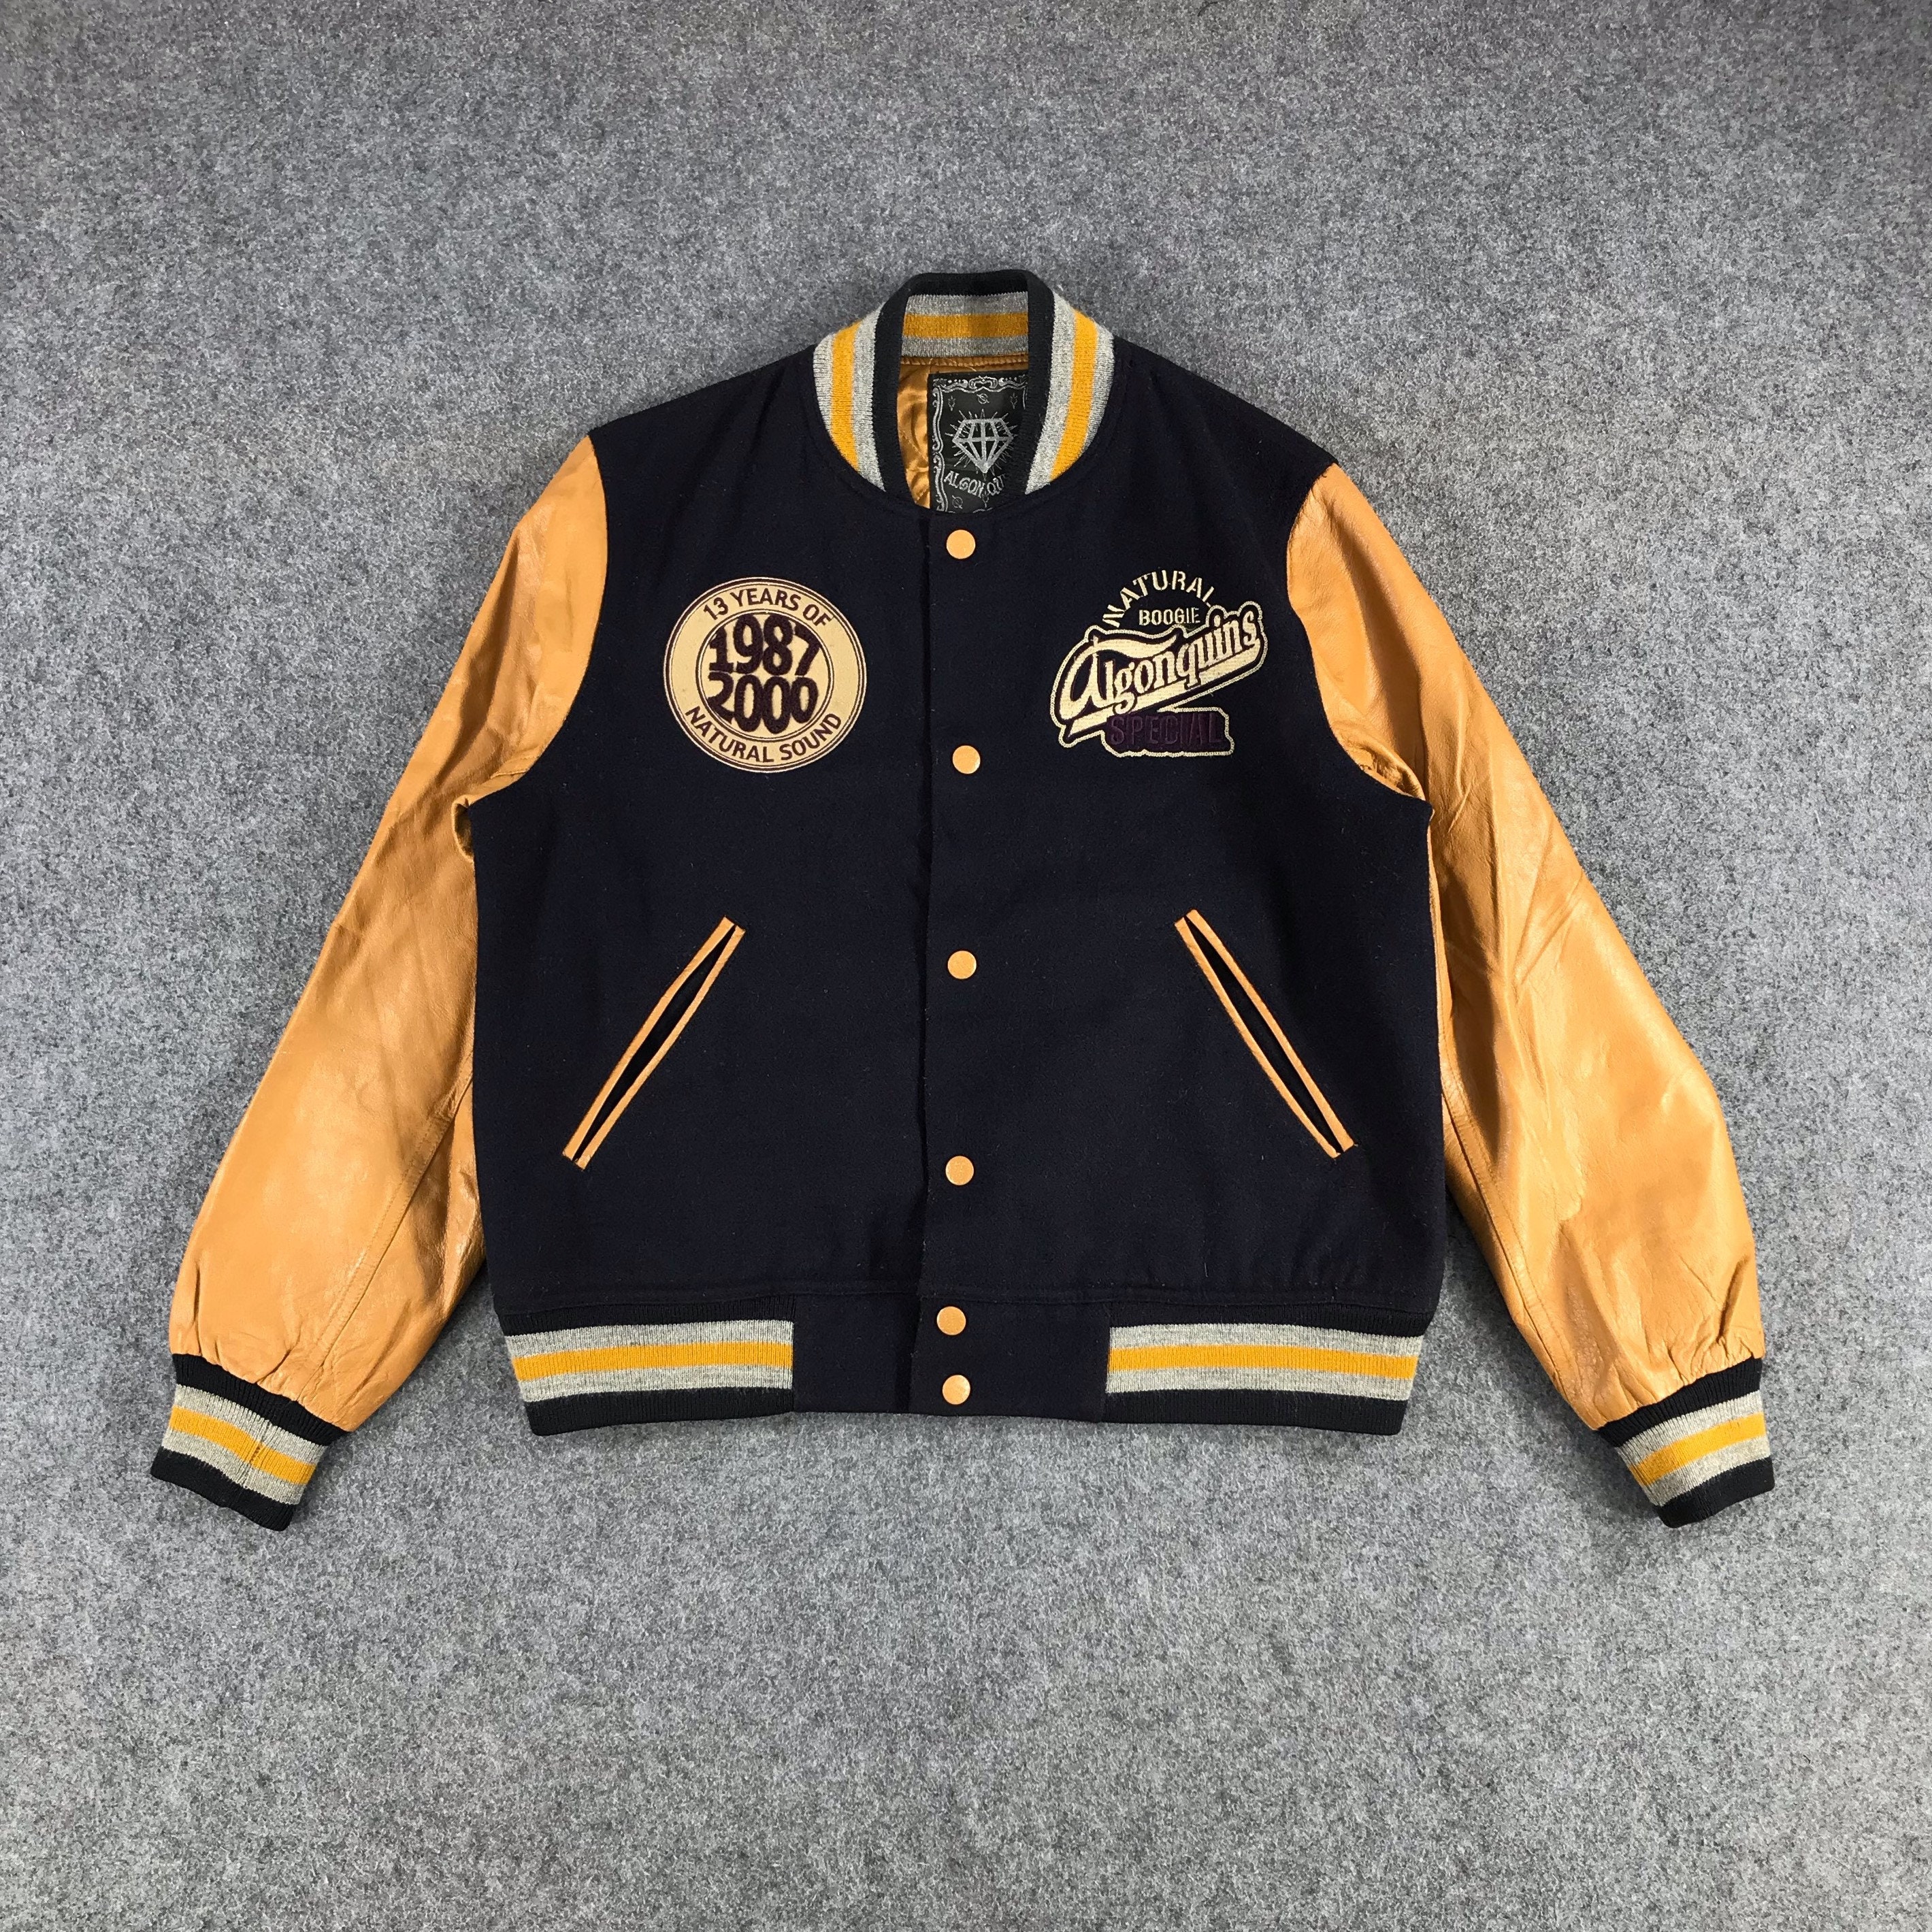 Vintage Algonquins Varsity Jacket Medium Size Vintage - Etsy